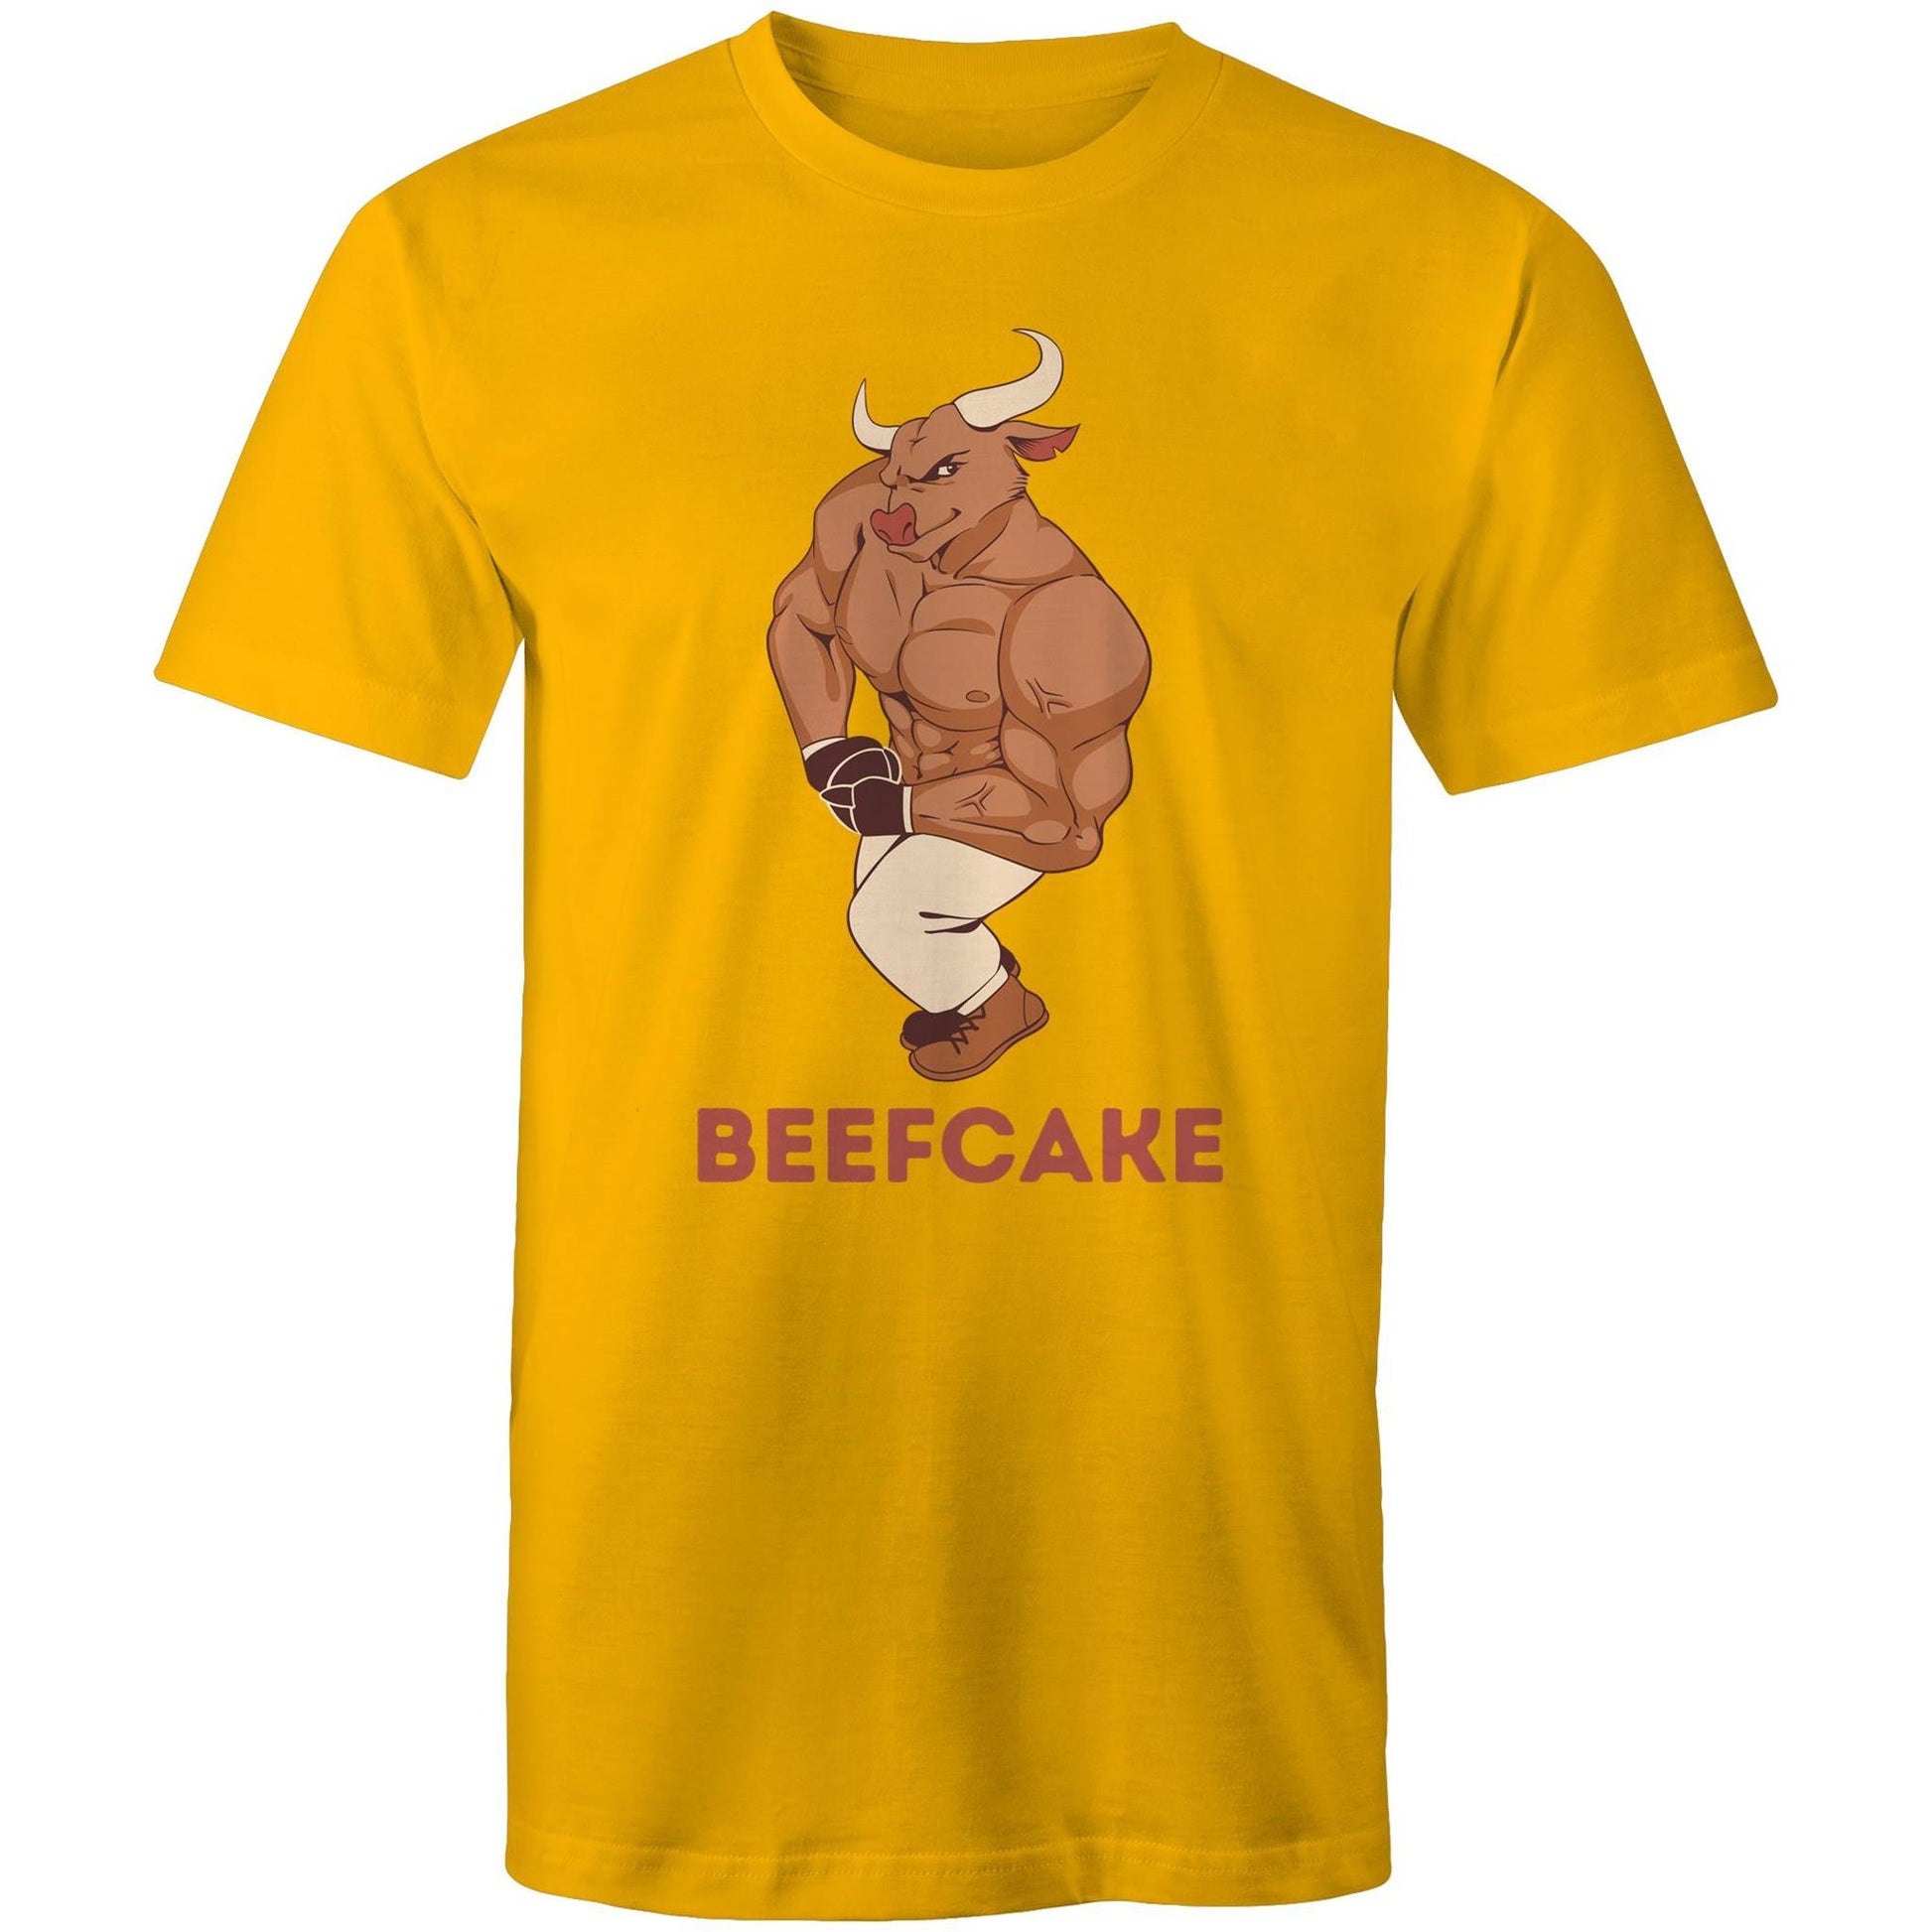 Beefcake, Bull, Gym - Mens T-Shirt Gold Fitness T-shirt Fitness